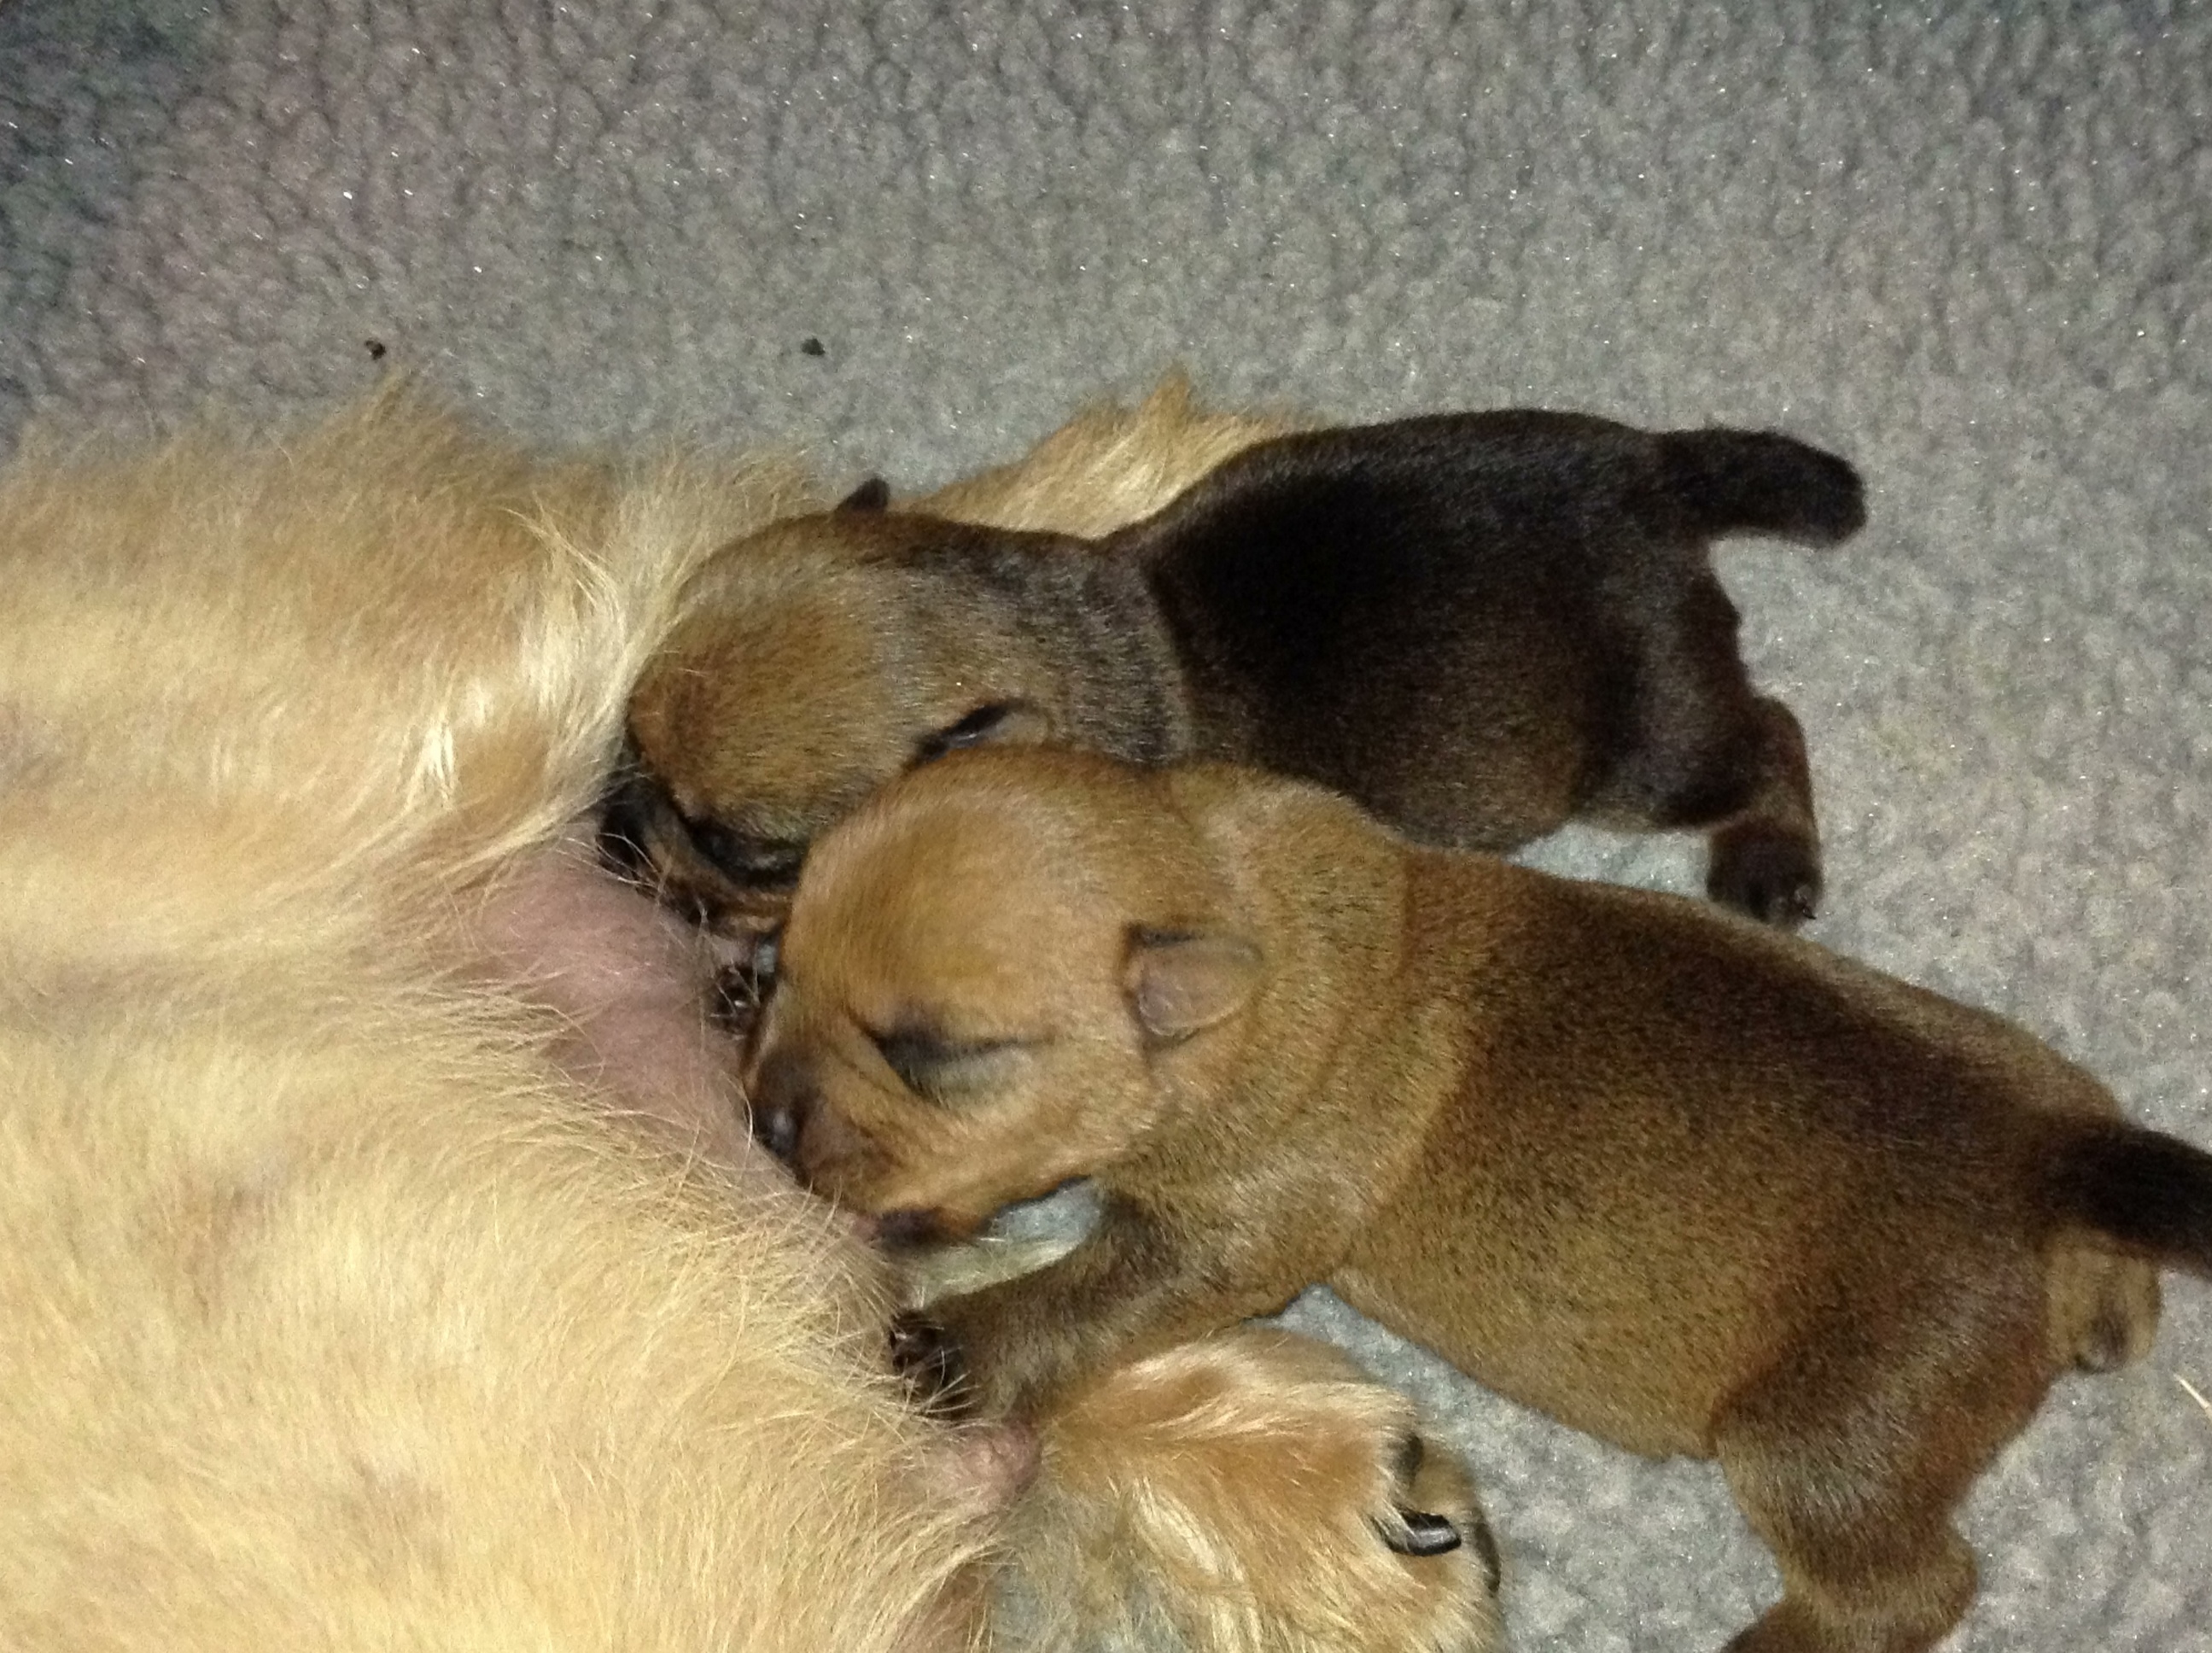 Puppies at 1 week old.